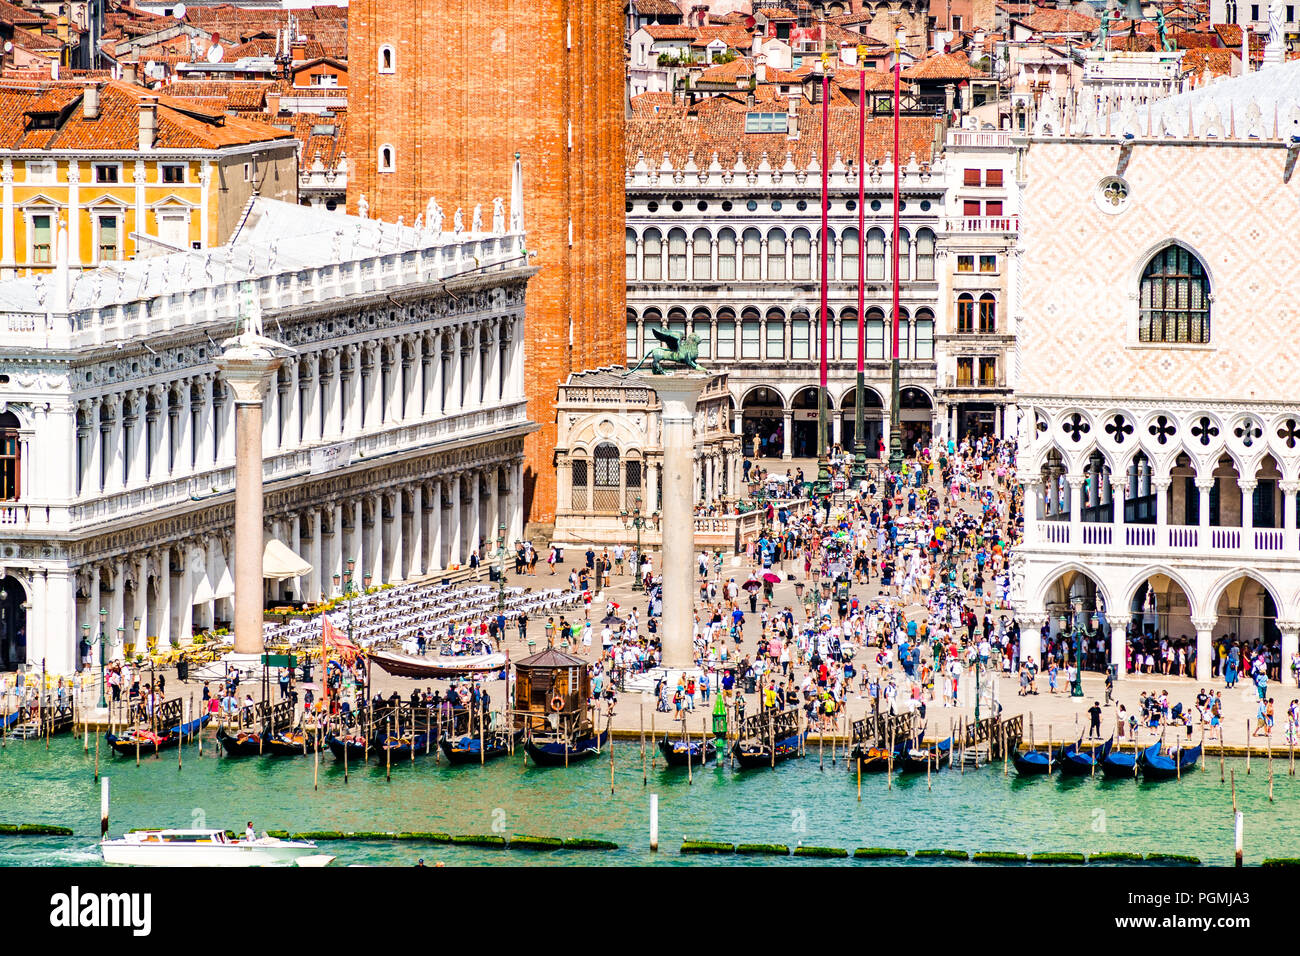 Piazza San Marco (Piazzetta di San Marco) si apre sul Canal Grande di Venezia. In estate questa zona è piena di turisti. Foto Stock